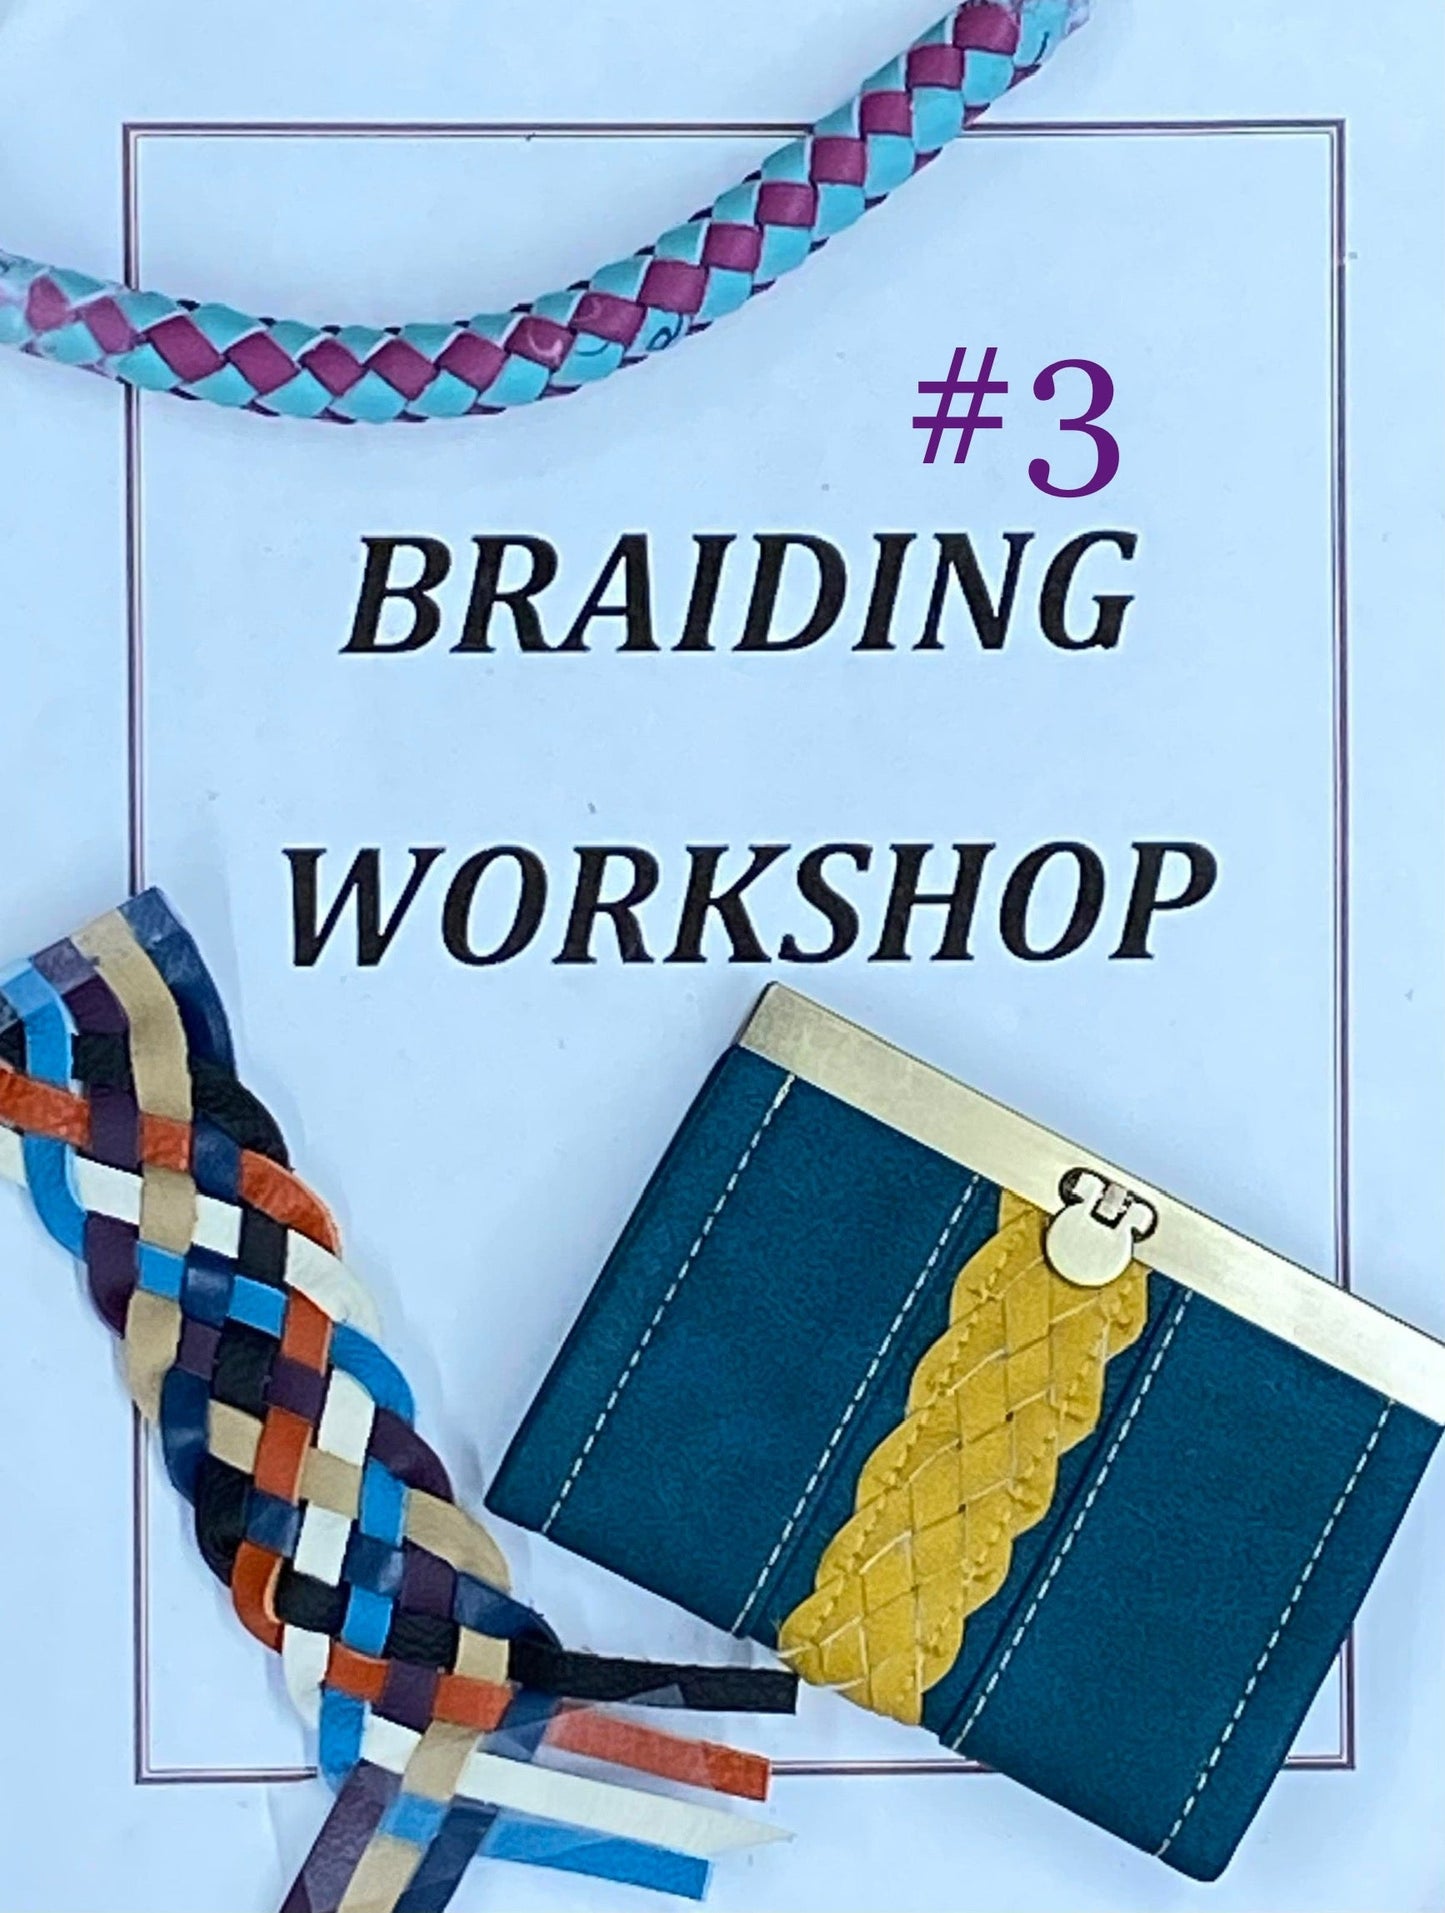 Braiding Workshop #3- Video 5, Session 4